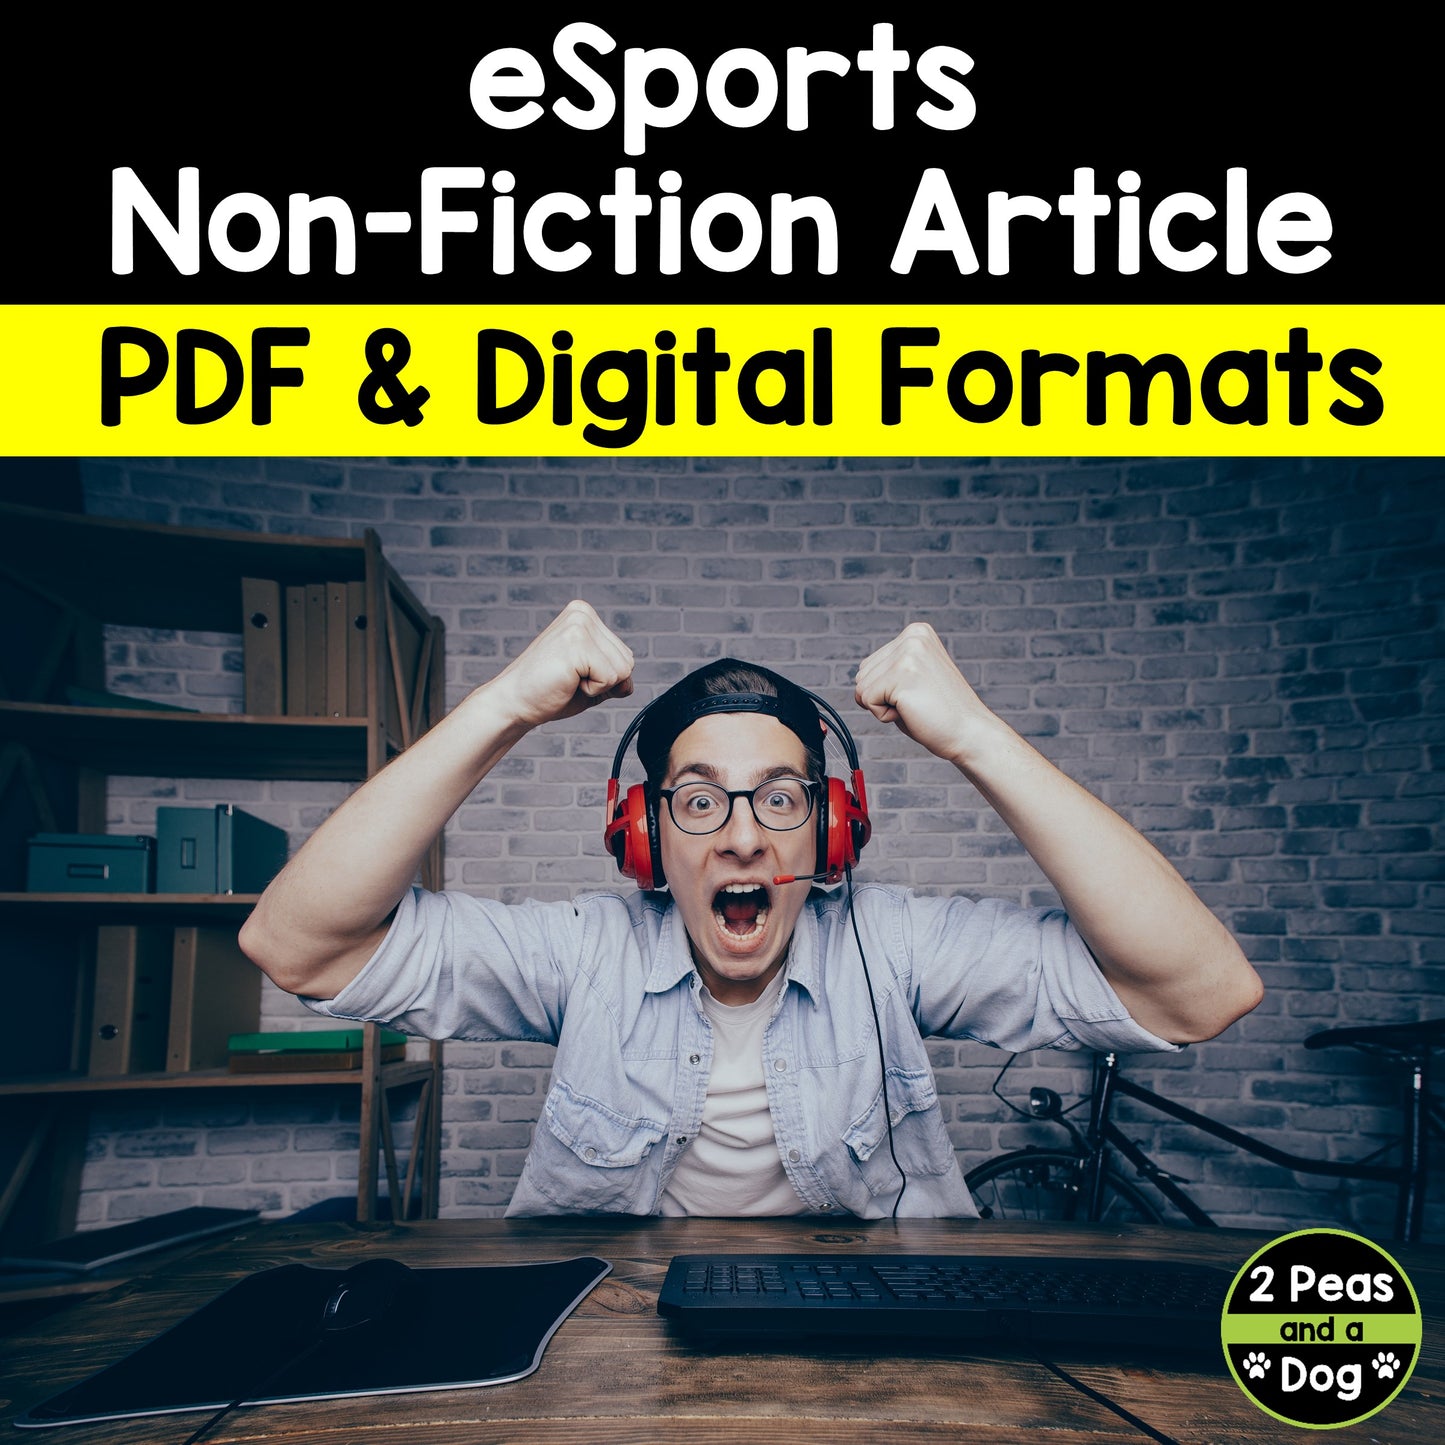 eSports Non-Fiction Article